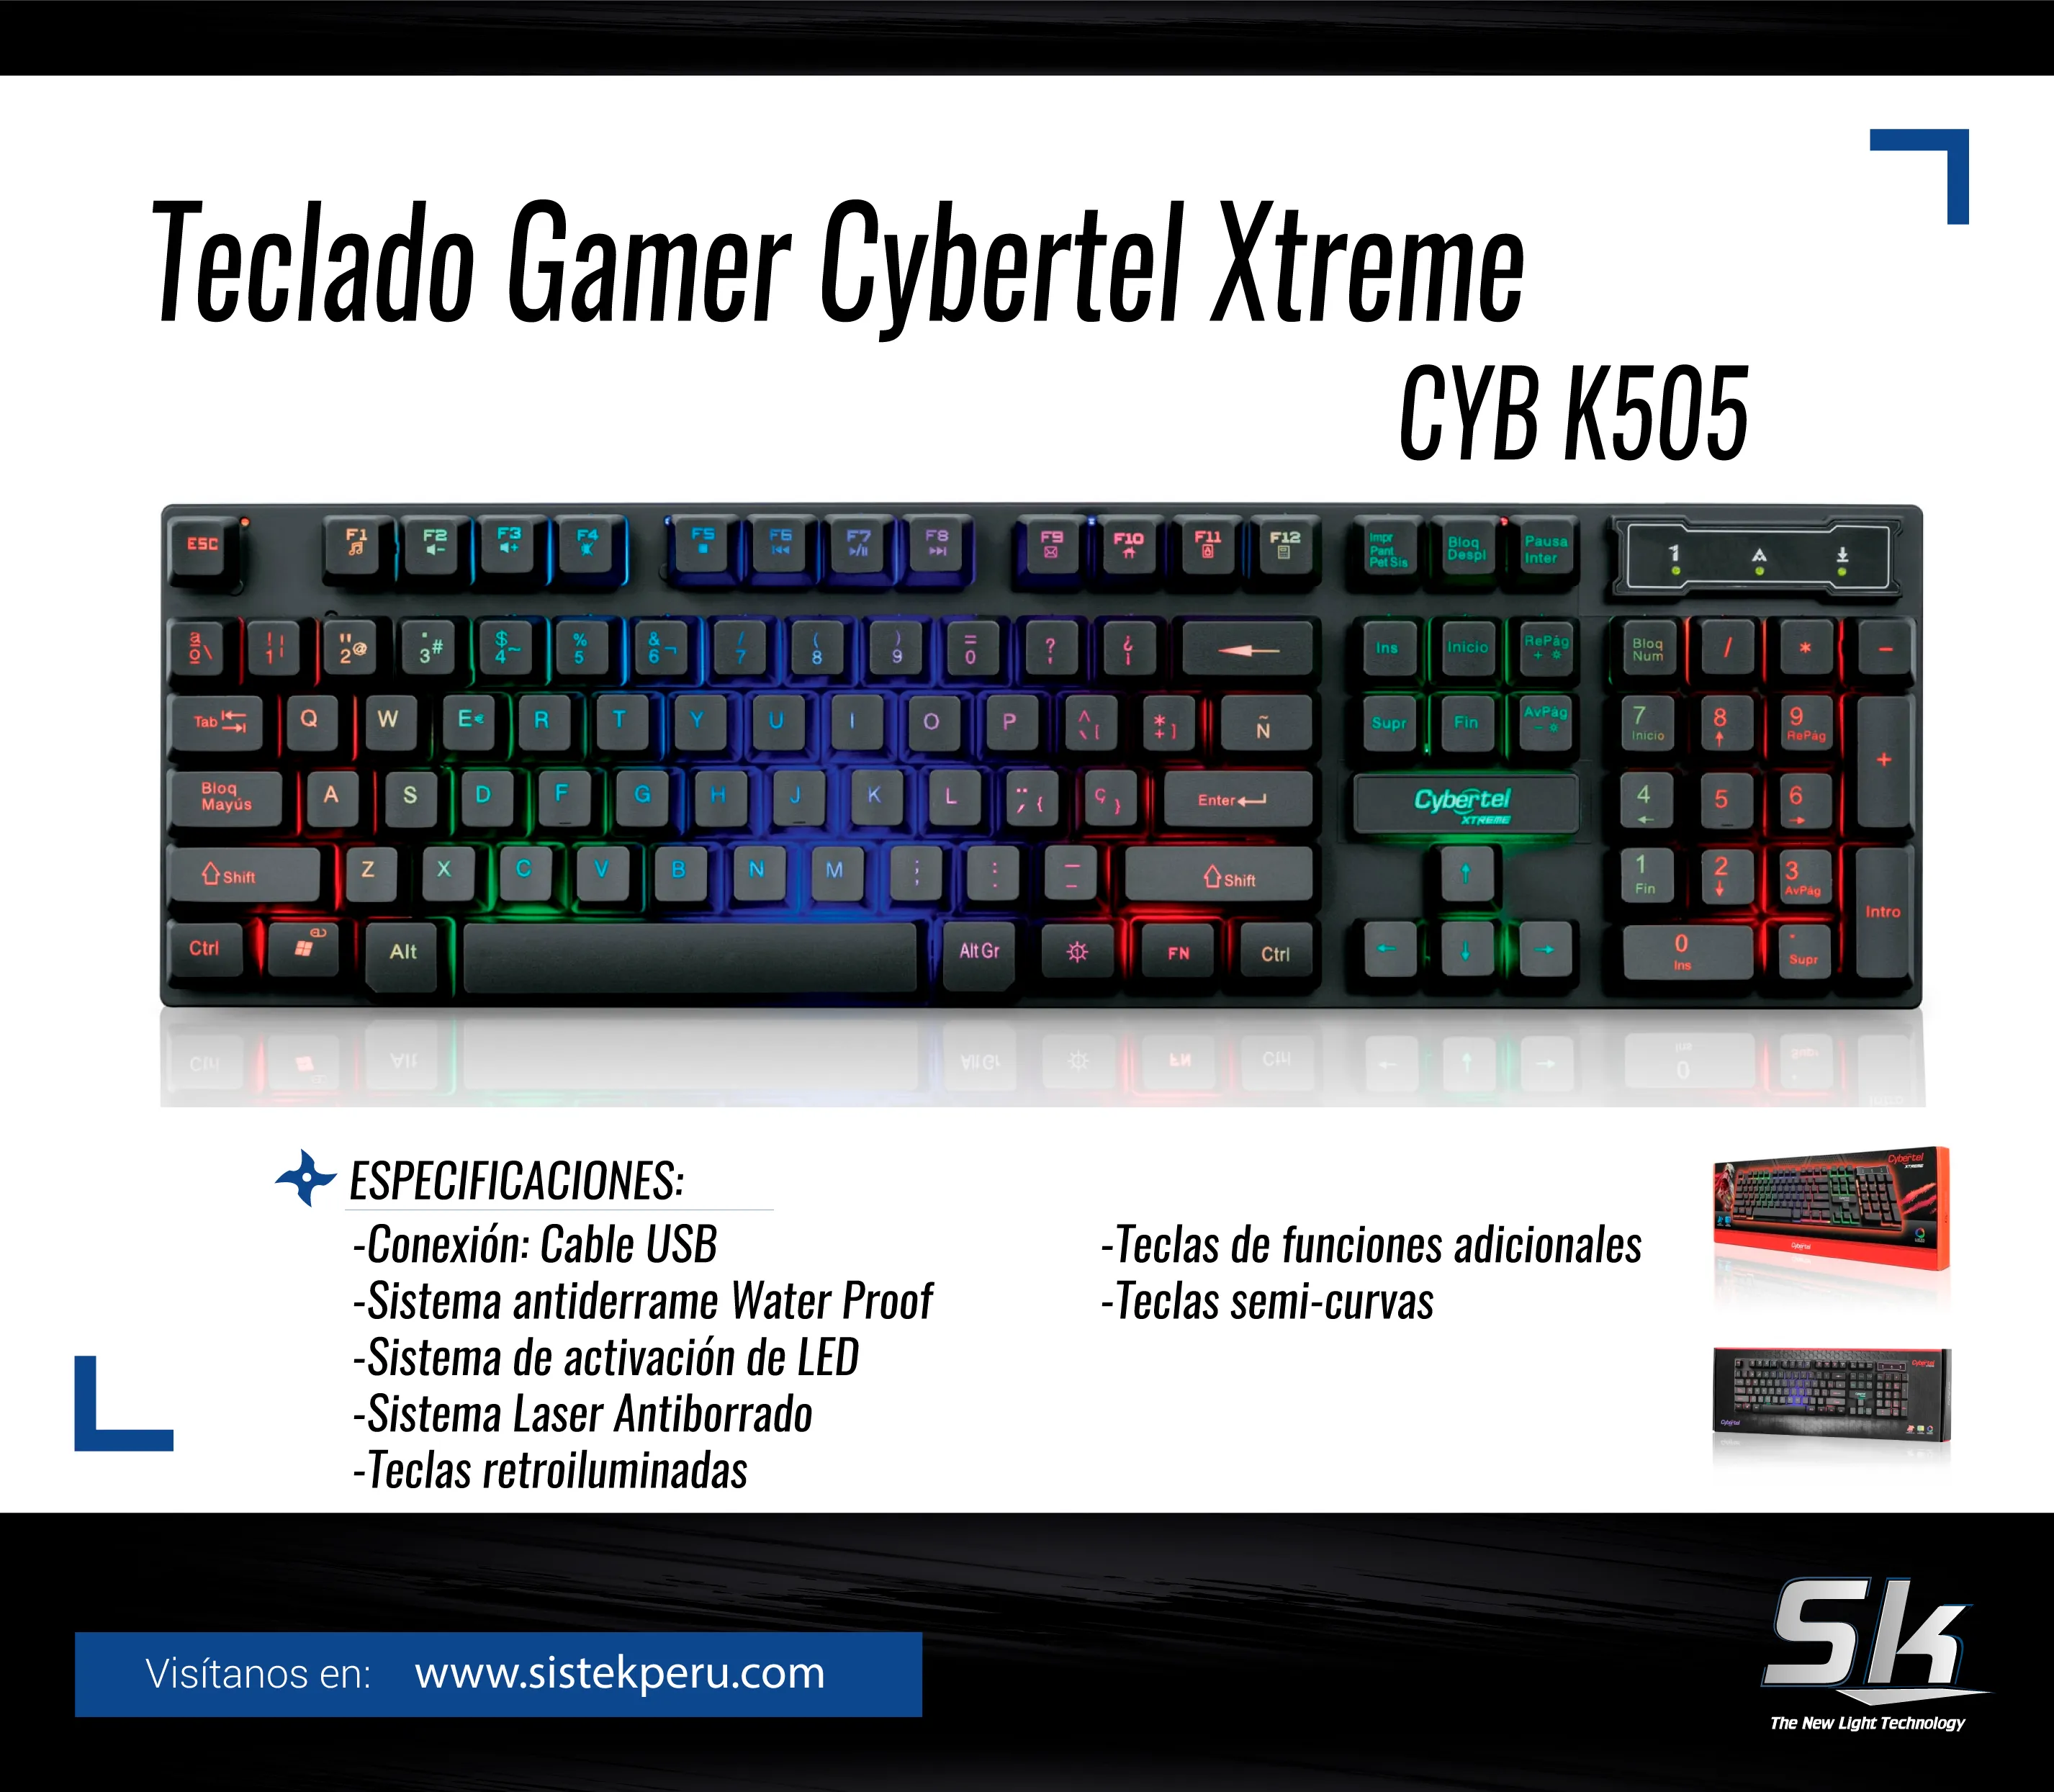 Teclado Gamer Cybertel Xtreme CYB K505